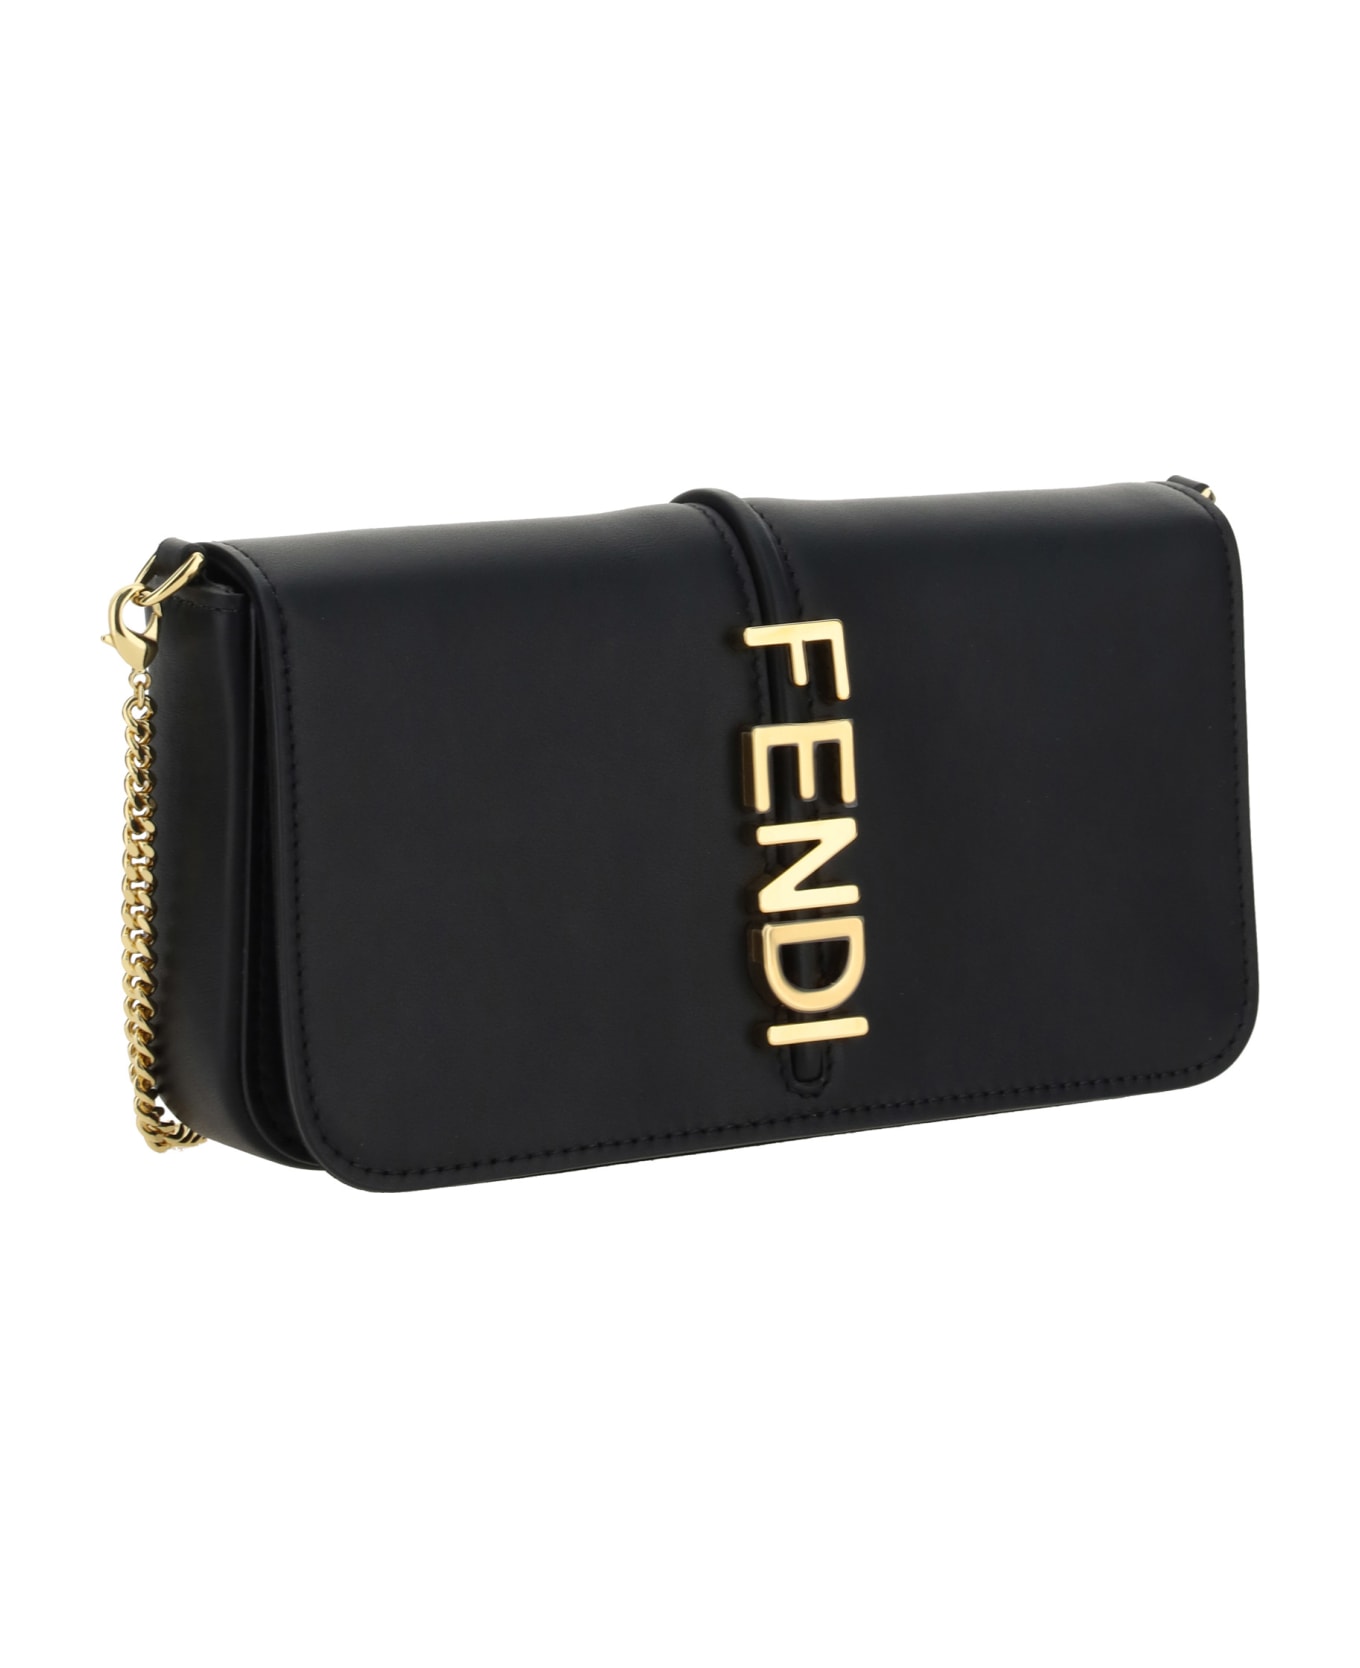 Fendi Wallet With Chain - Kur Nero